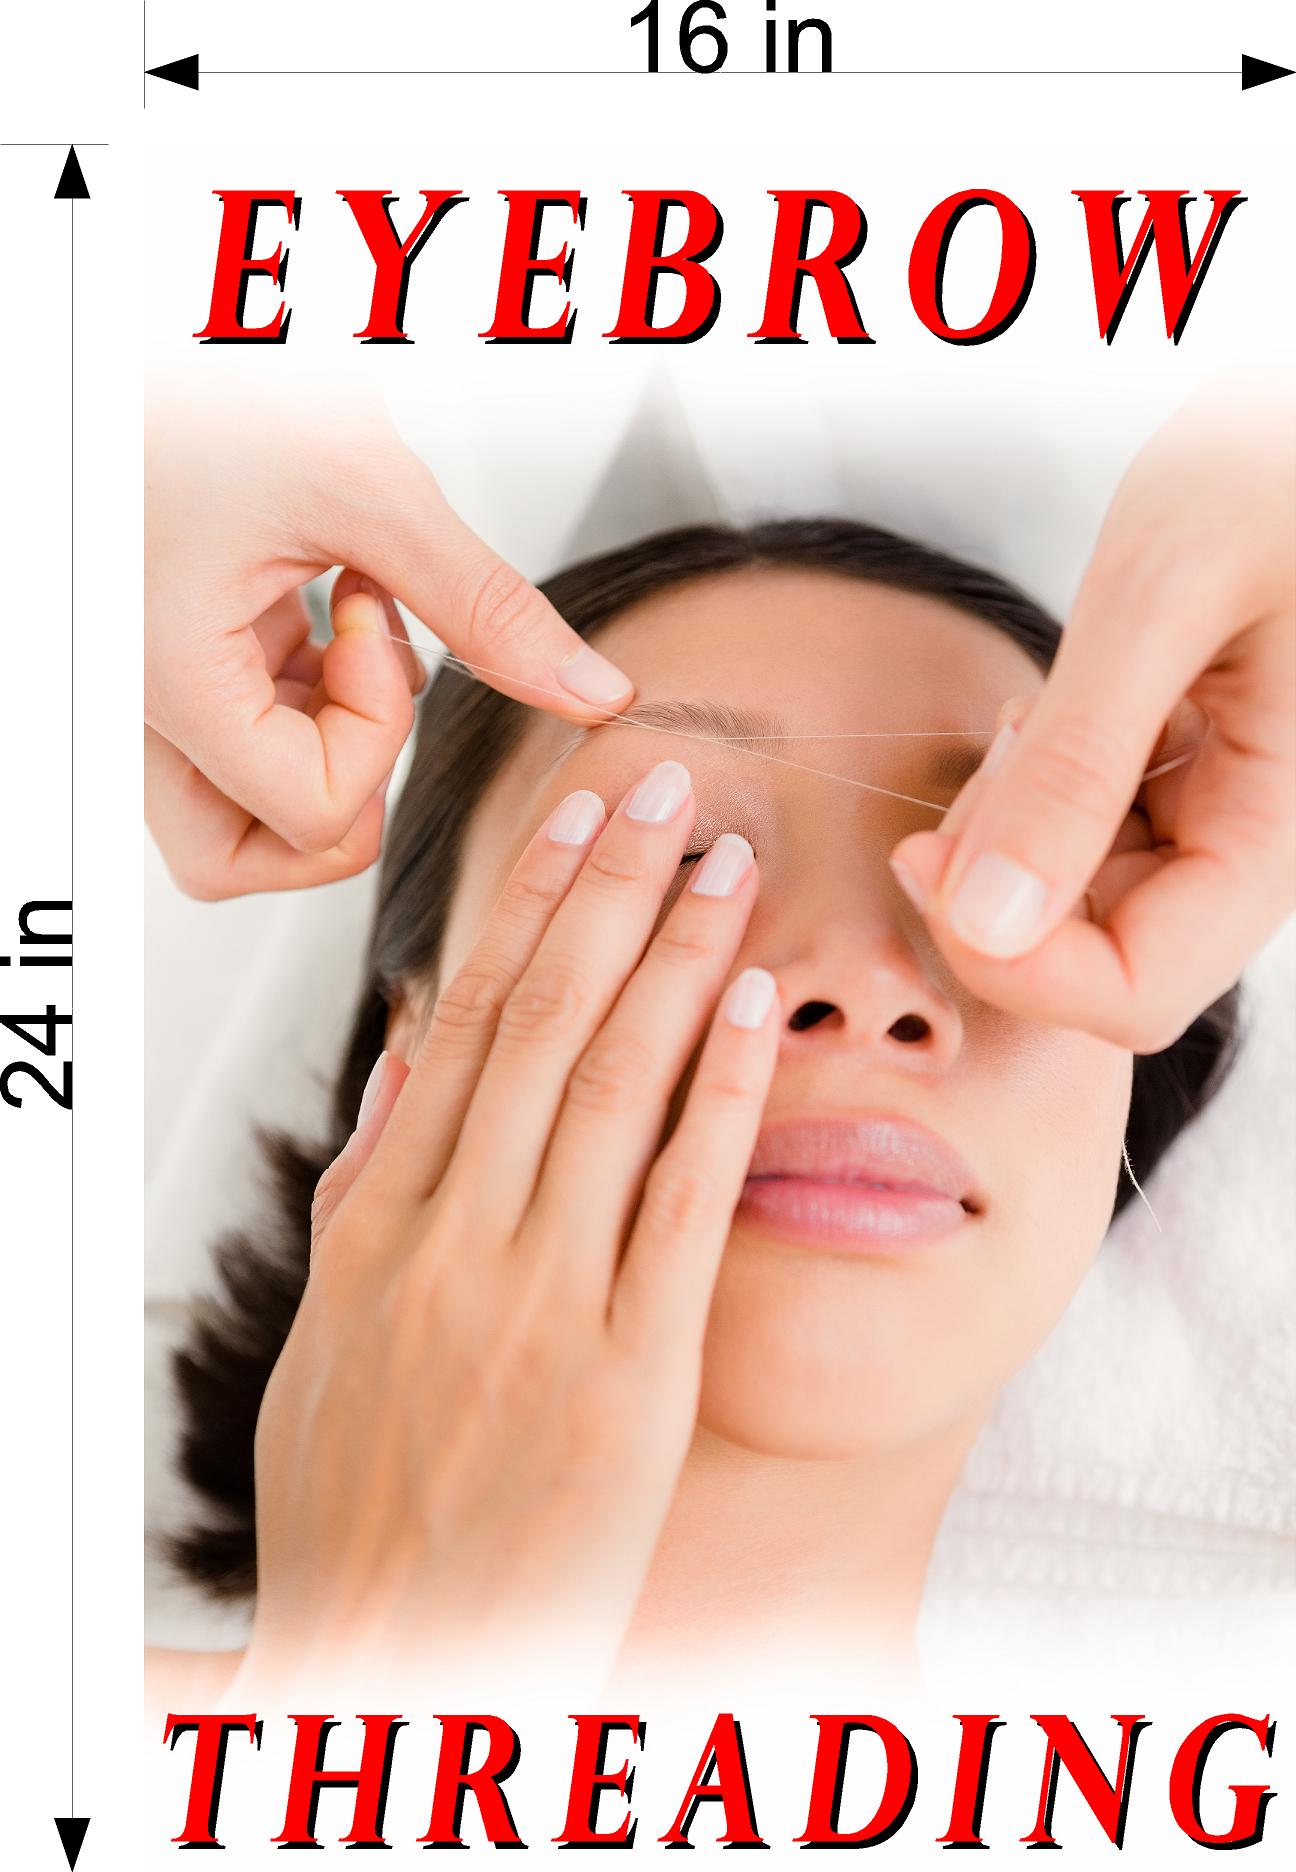 Eyebrows 16 Photo-Realistic Paper Poster Premium Interior Inside Sign Advertising Marketing Wall Window Non-Laminated Eyelash Vertical